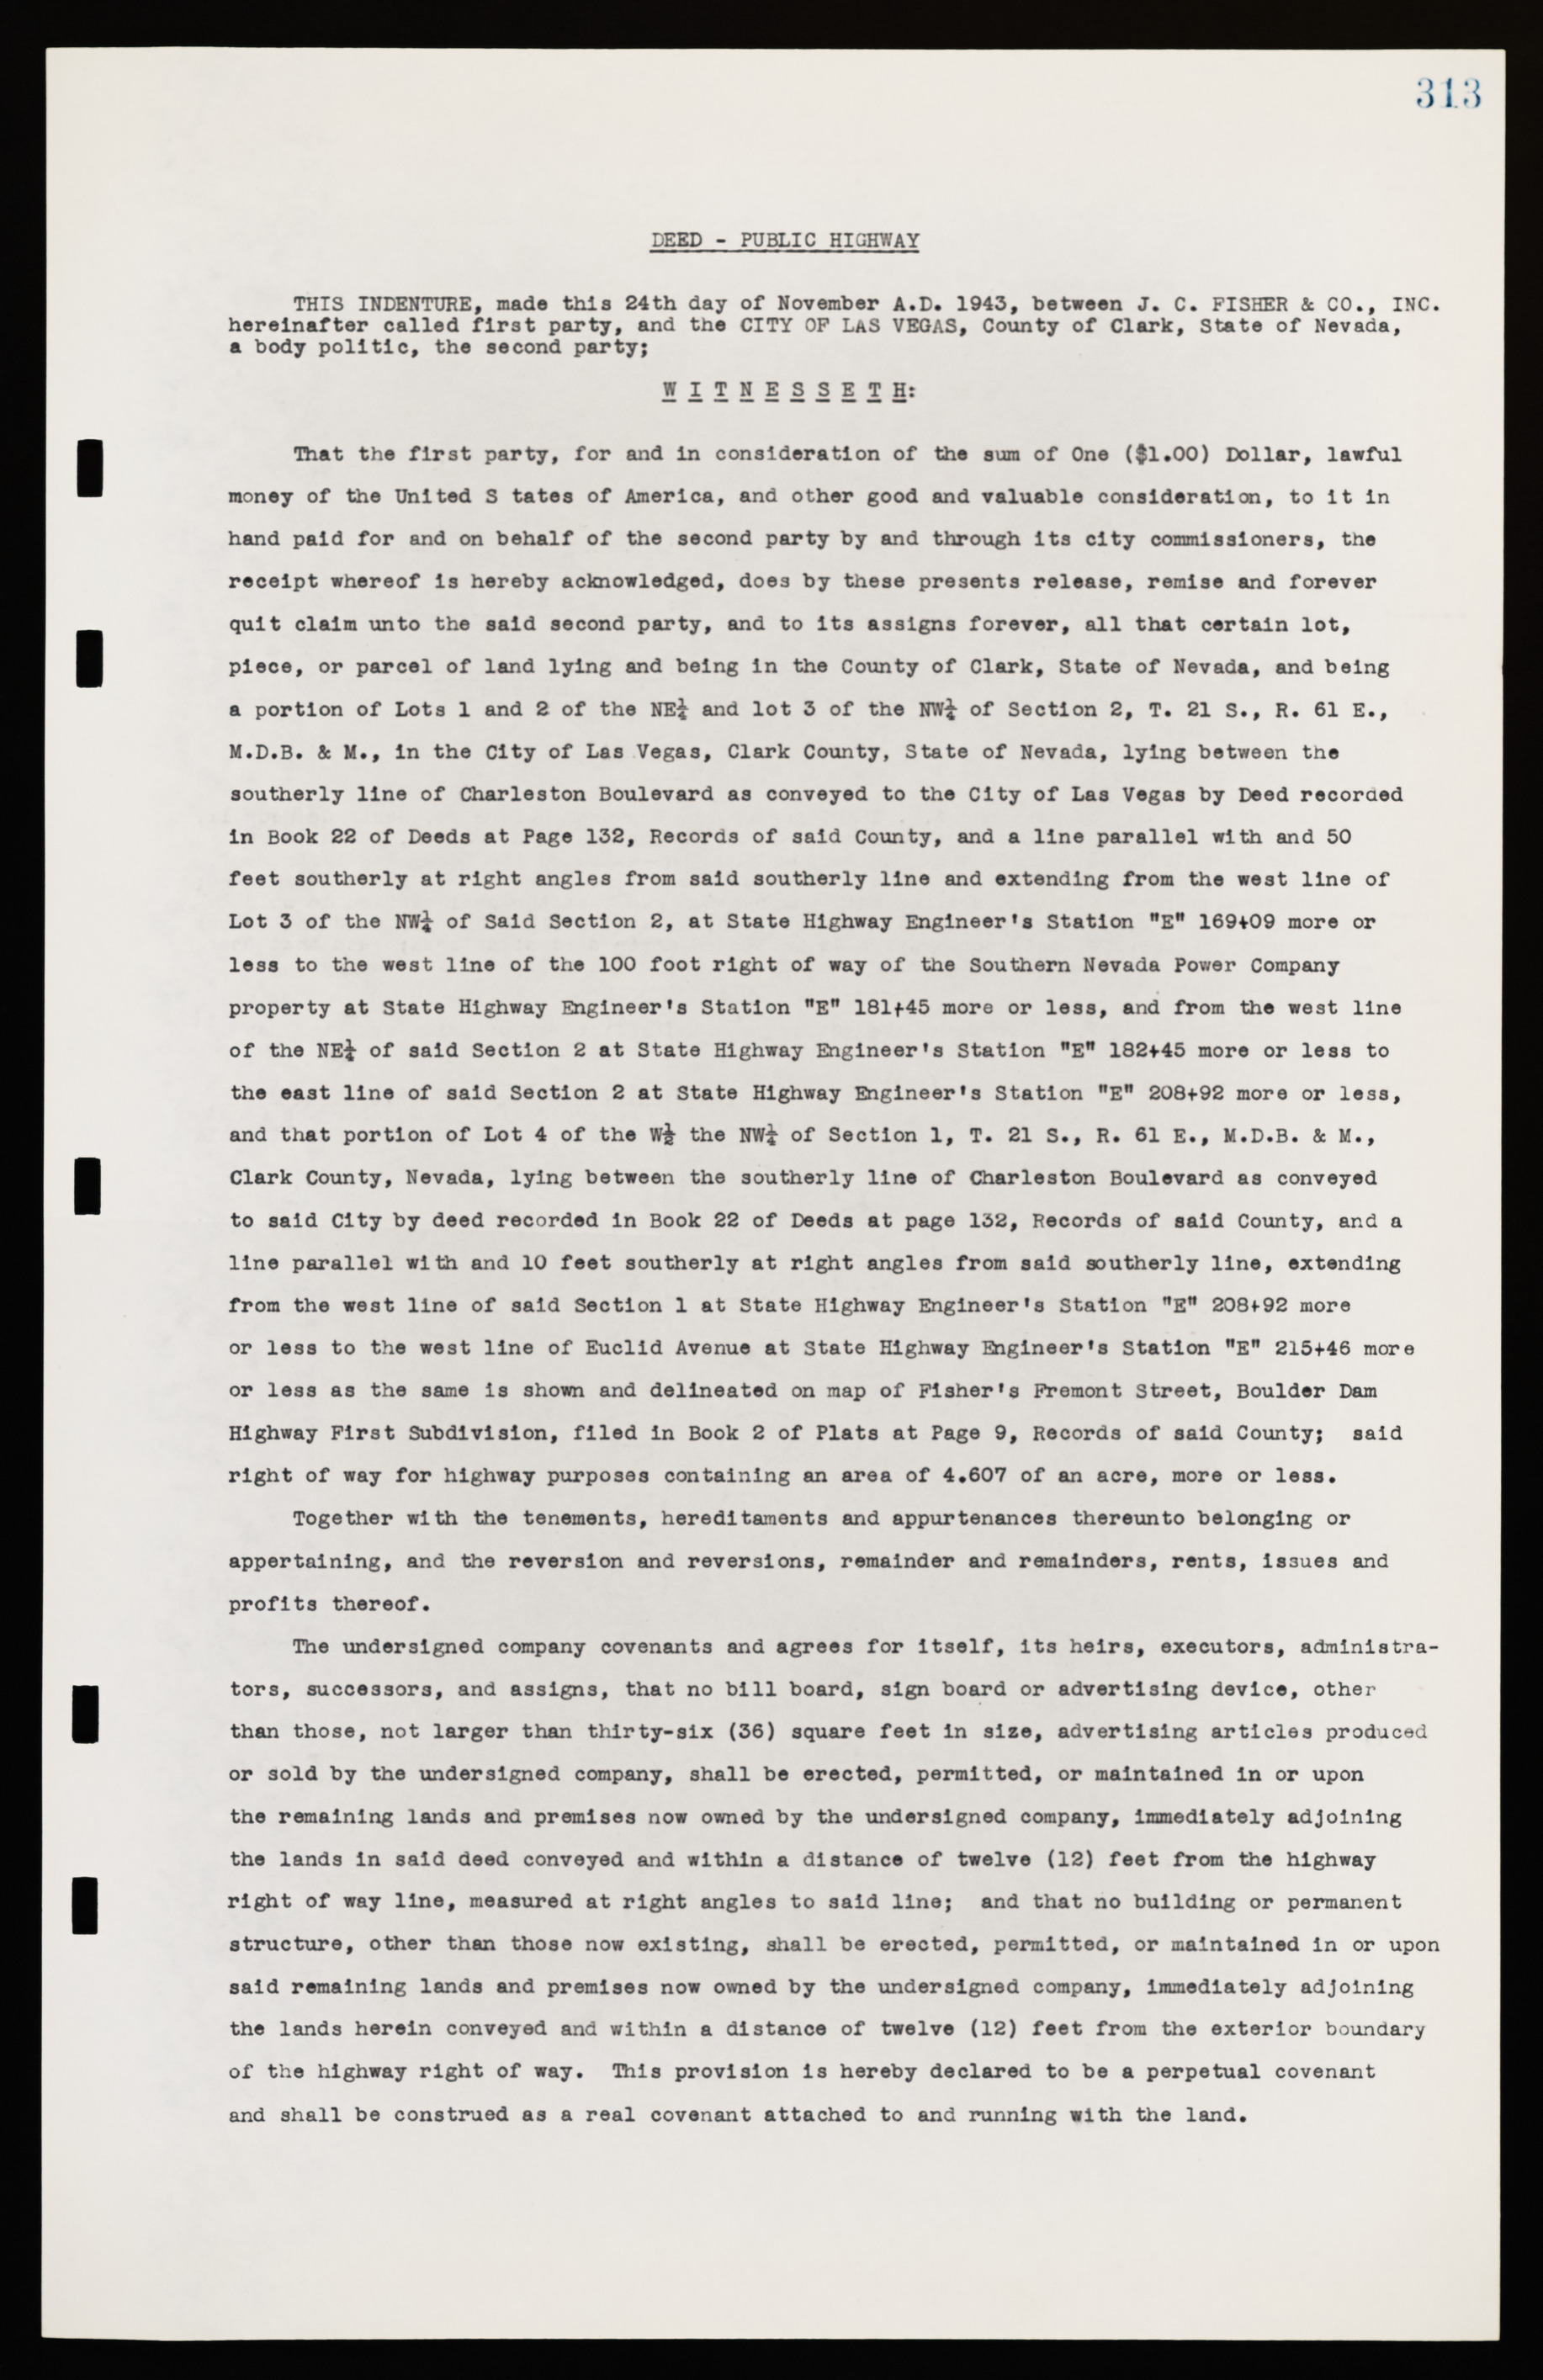 Las Vegas City Commission Legal Documents, February 29, 1944 to February 21, 1945, lvc000016-76